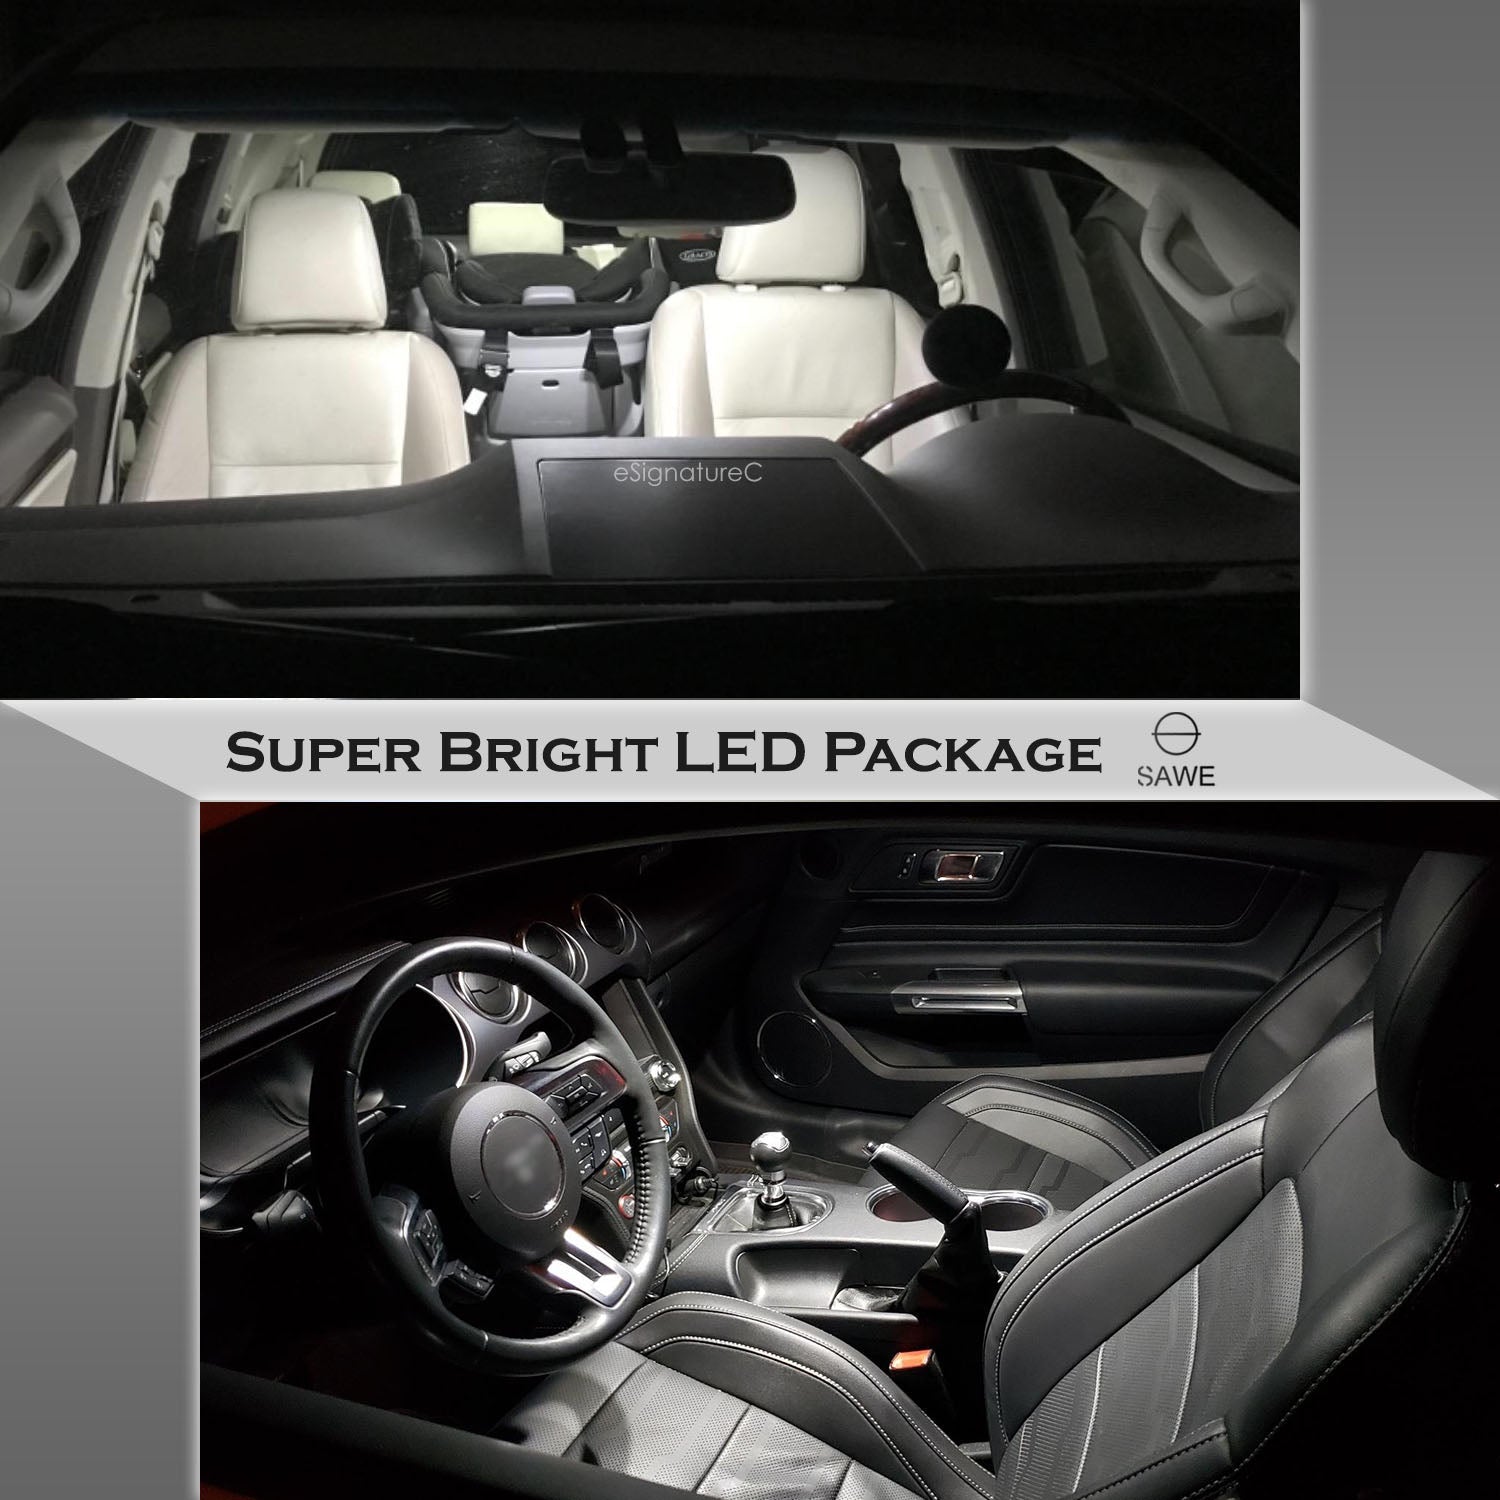 For Ford Freestar Interior LED Lights - Dome & Map Light Bulbs Package Kit for 2004 - 2007 - White